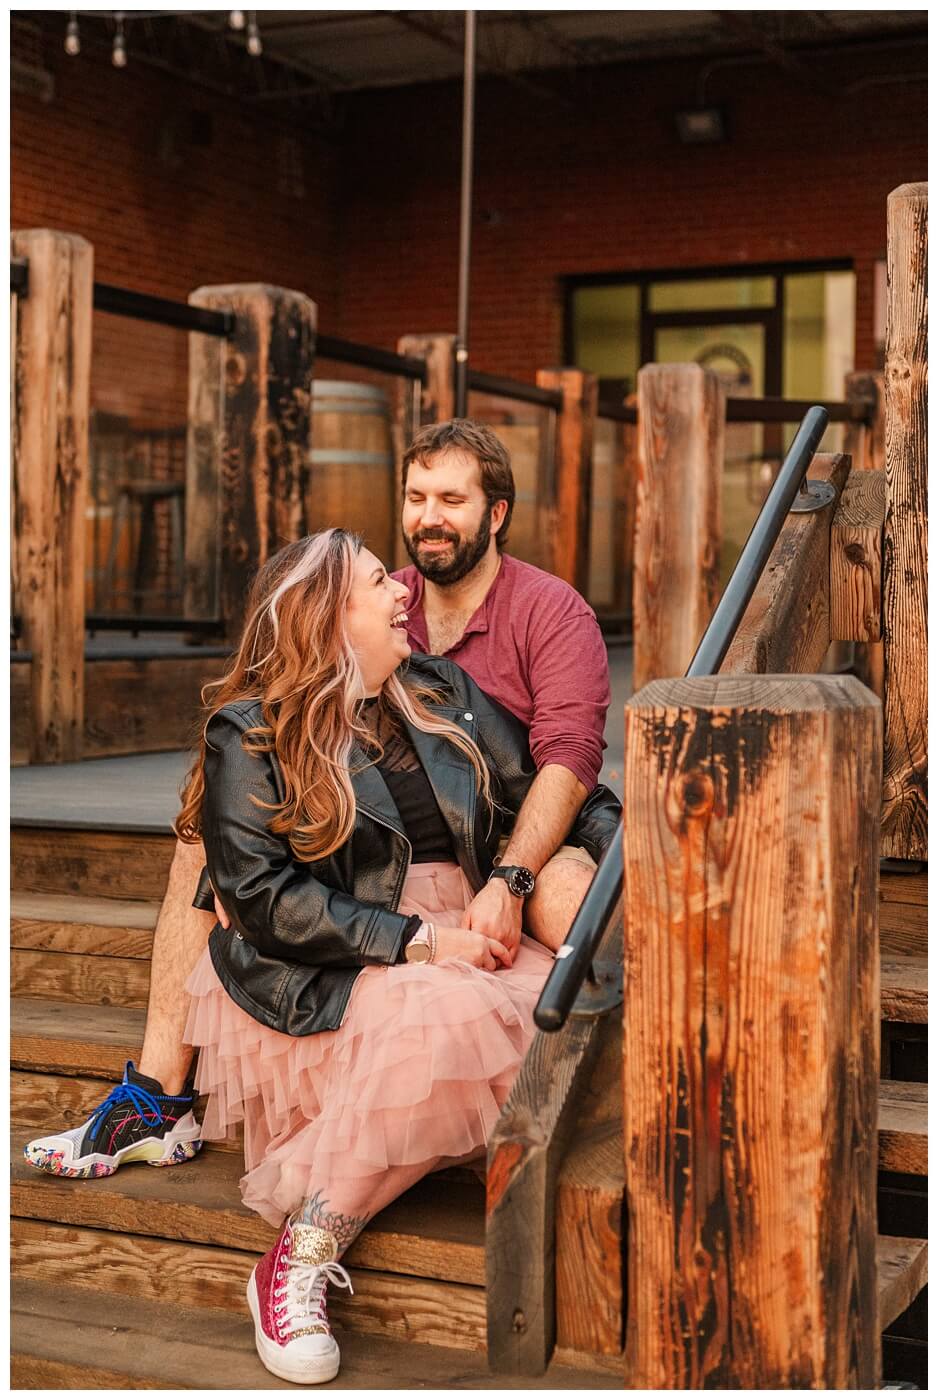 TJ & Danielle - Regina Warehouse District - 15 - Couple sits on wooden steps